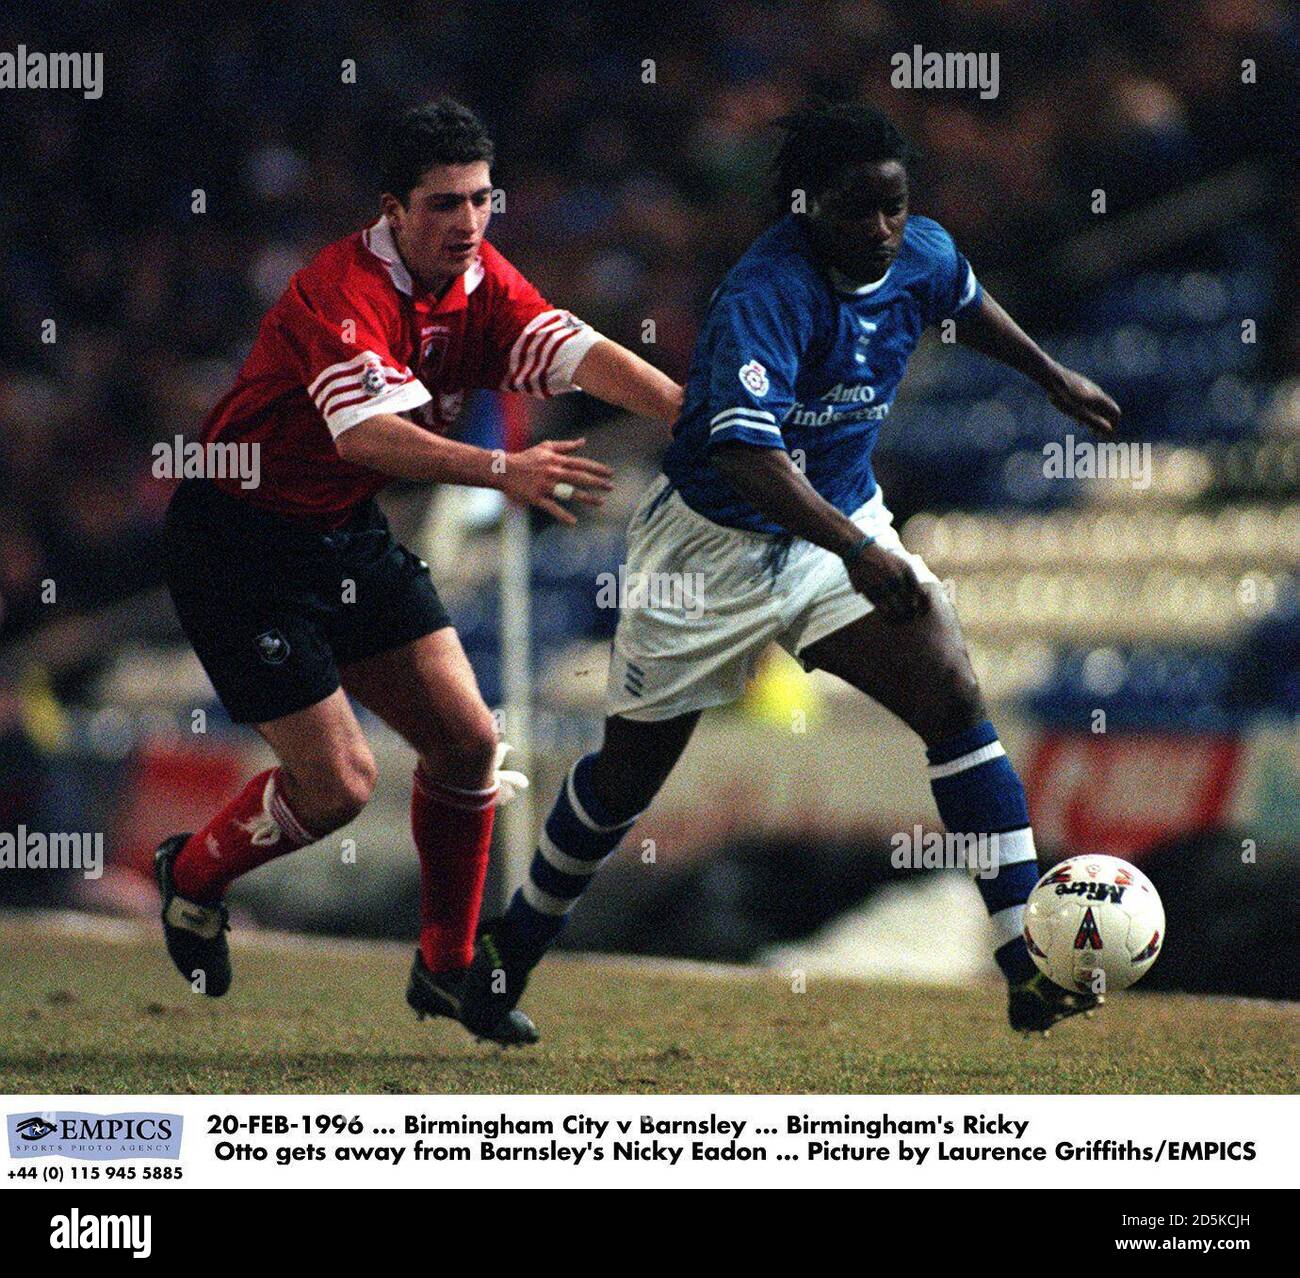 20-FEB-1996... Birmingham City contra Barnsley... Ricky Otto de Birmingham se aleja de Nicky Eadon de Barnsley... Foto de Laurence Griffiths/EMPICS Foto de stock